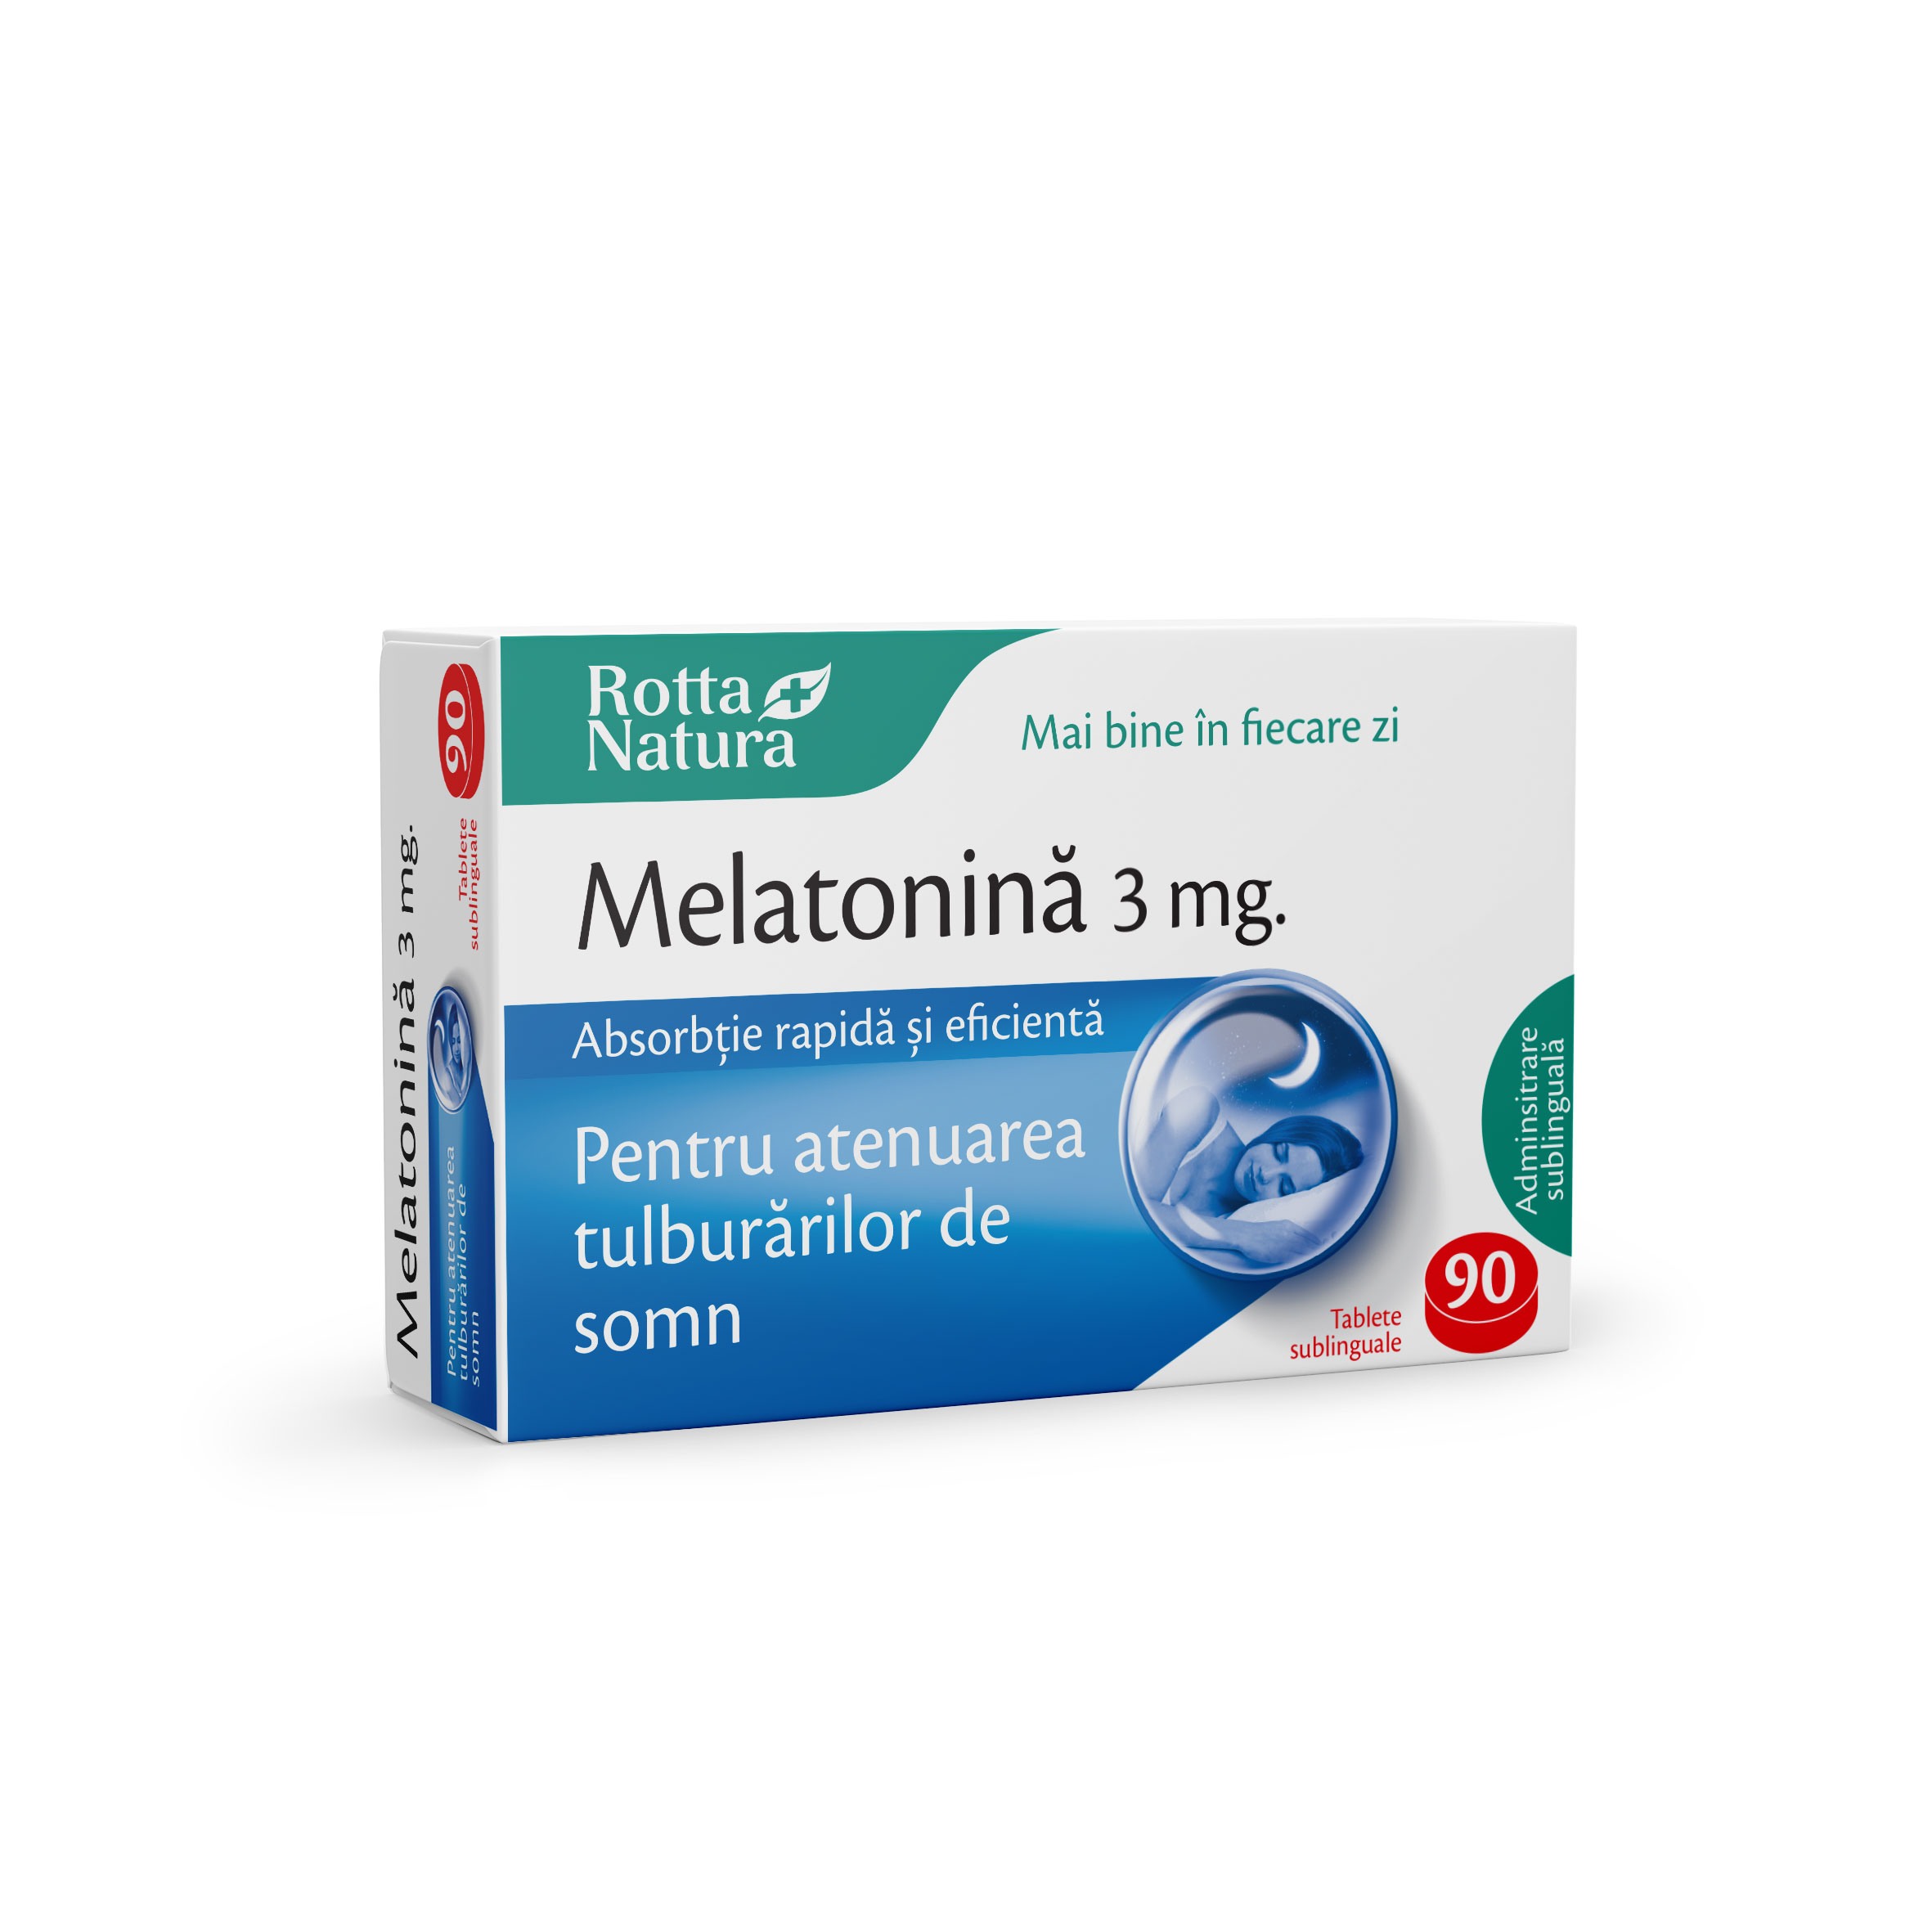 Sedative - Melatonină sublinguală 3mg, 90 tablete, Rotta Natura, sinapis.ro